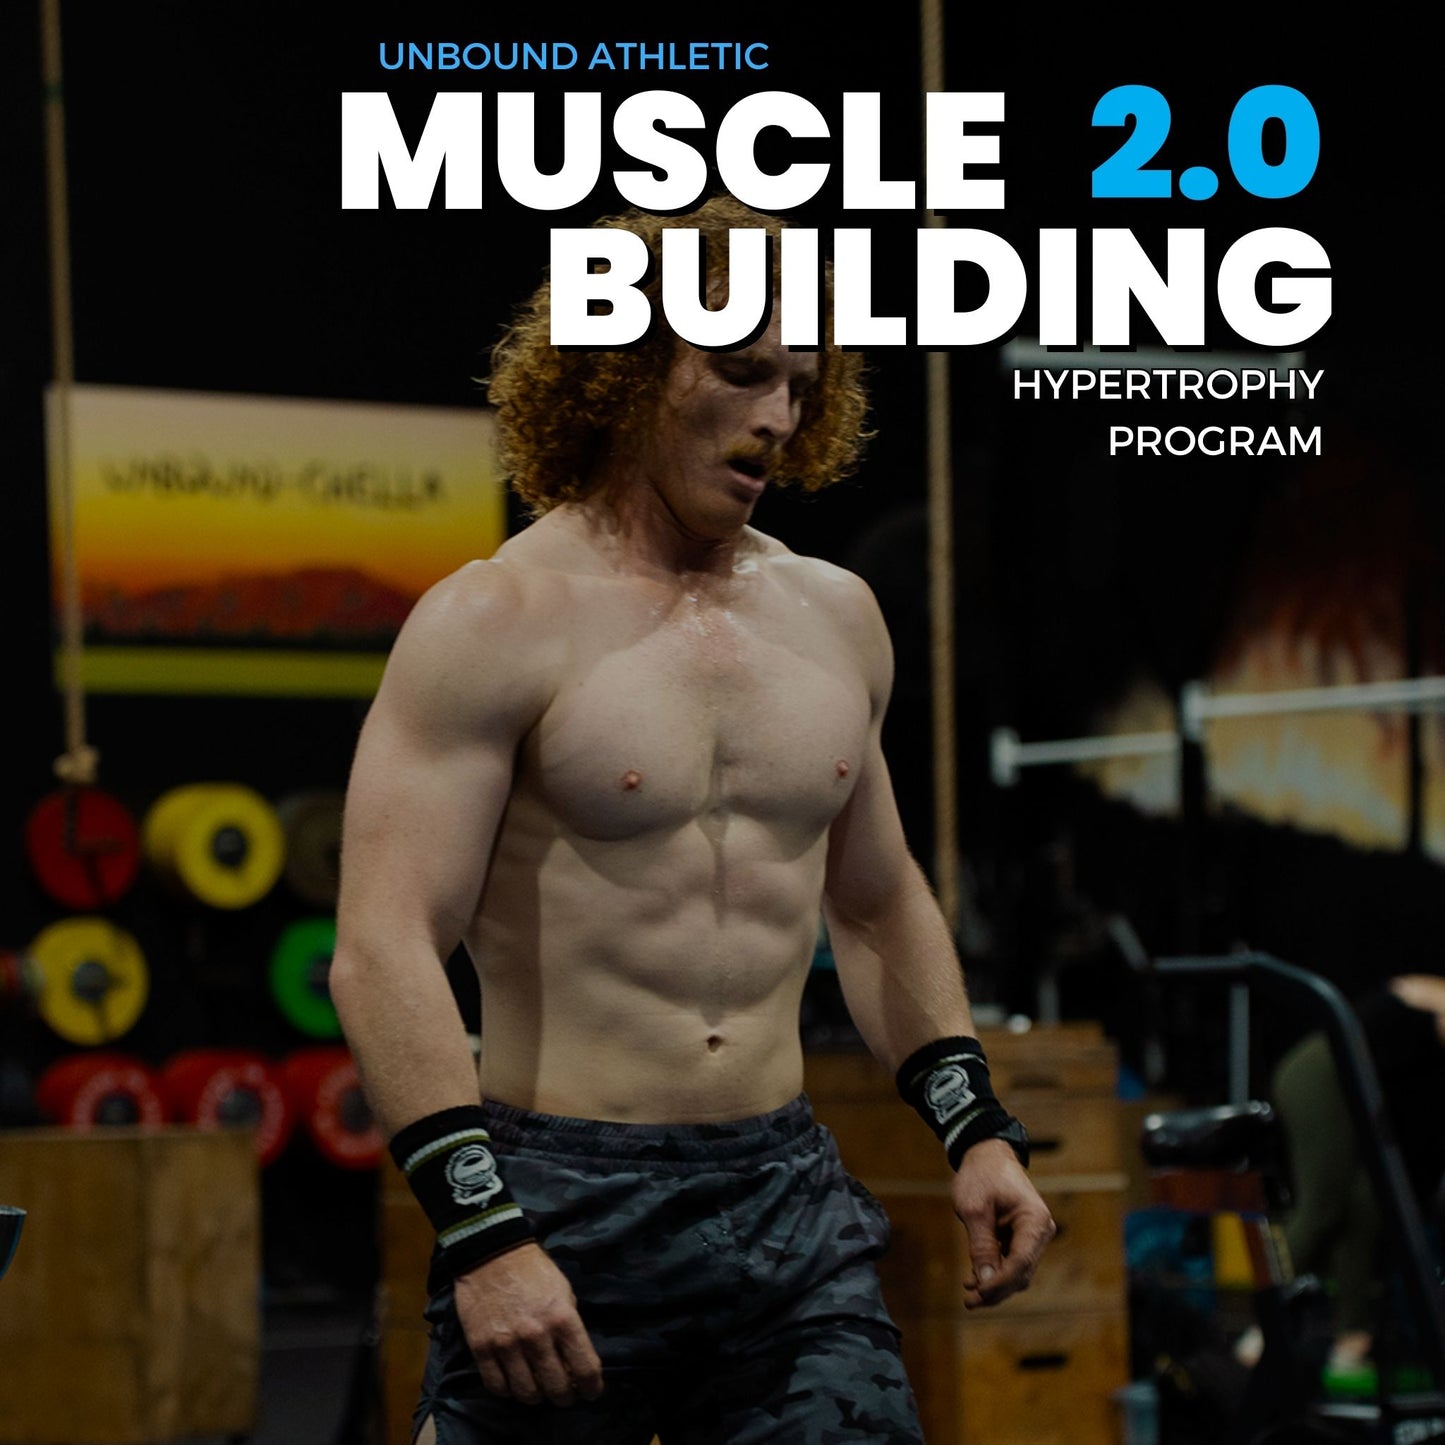 Muscle Building Program